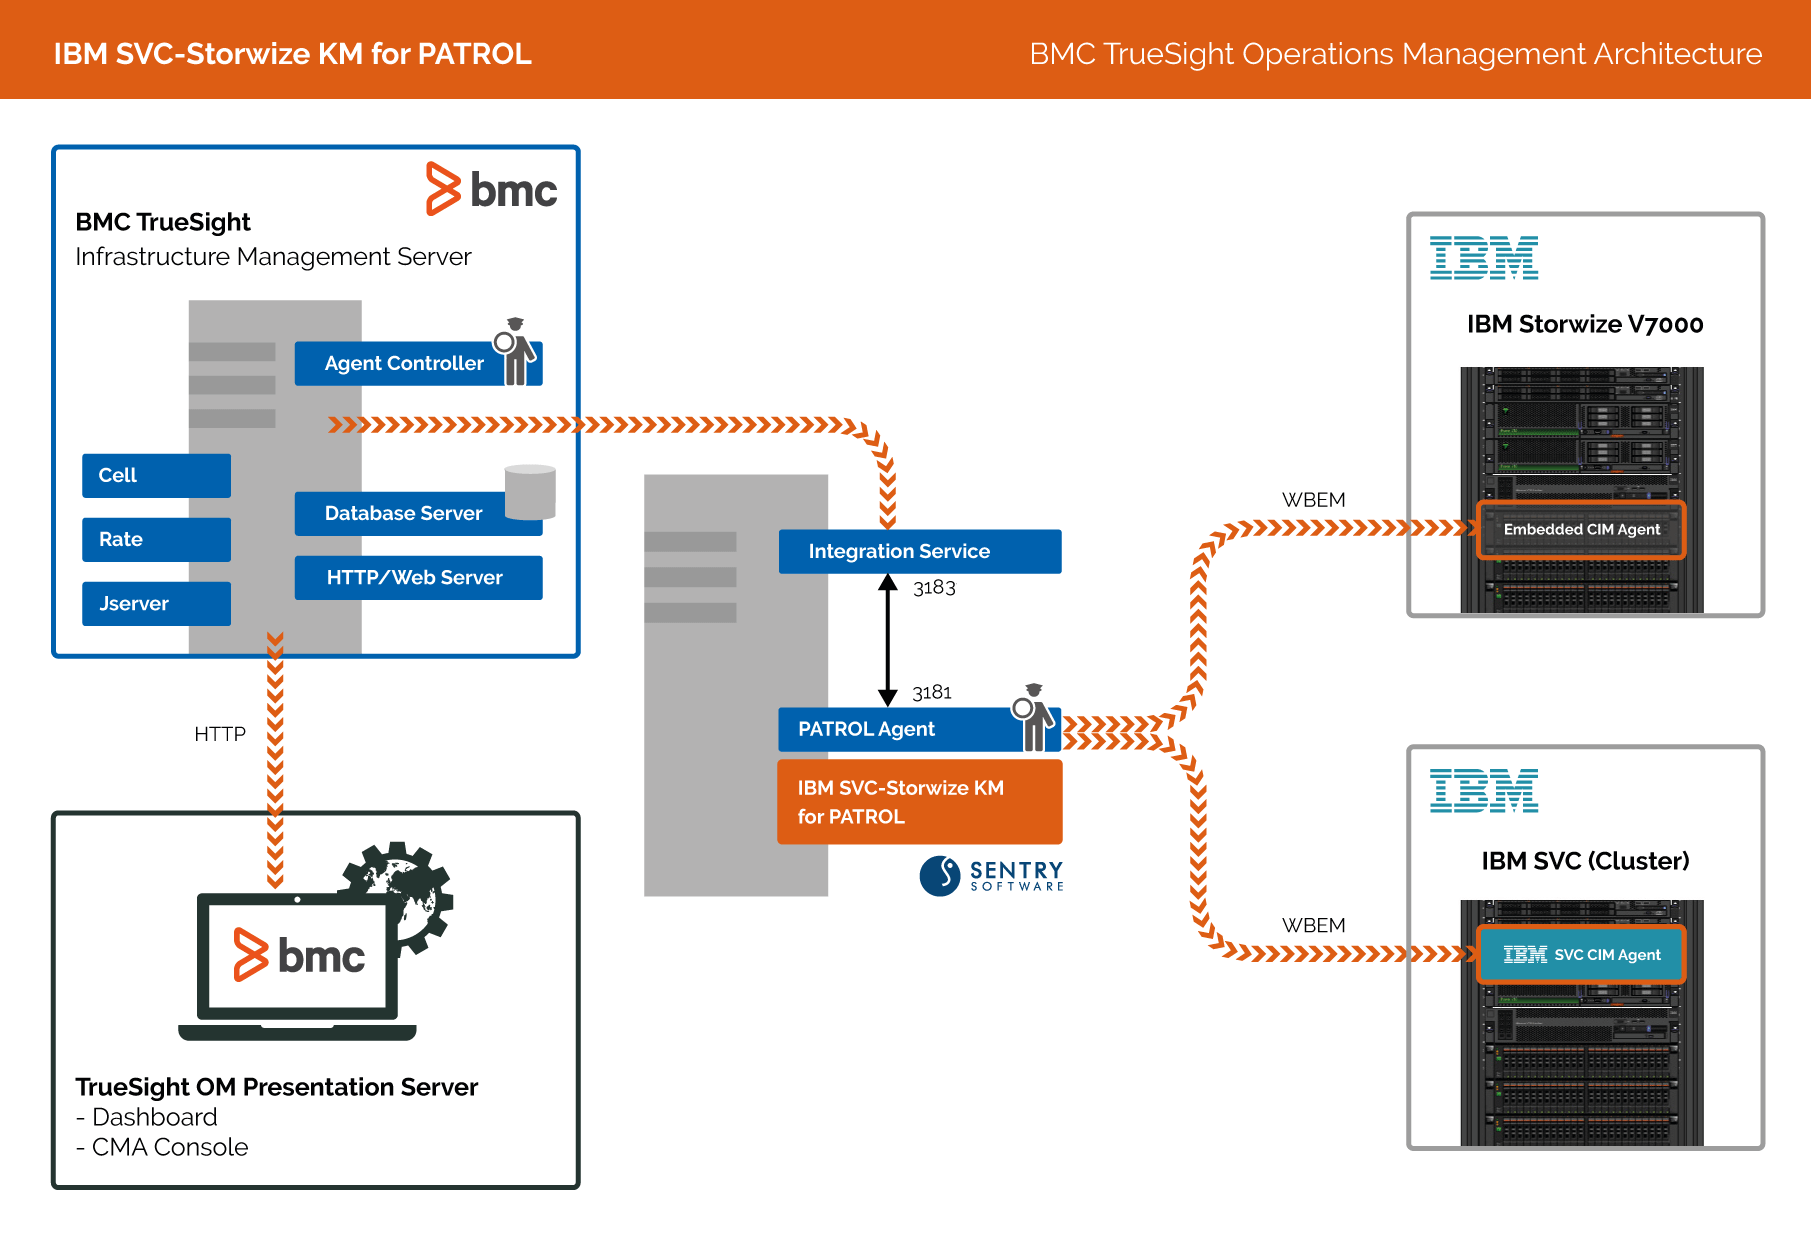 IBM SVC-Storwize - Architecture Diagram